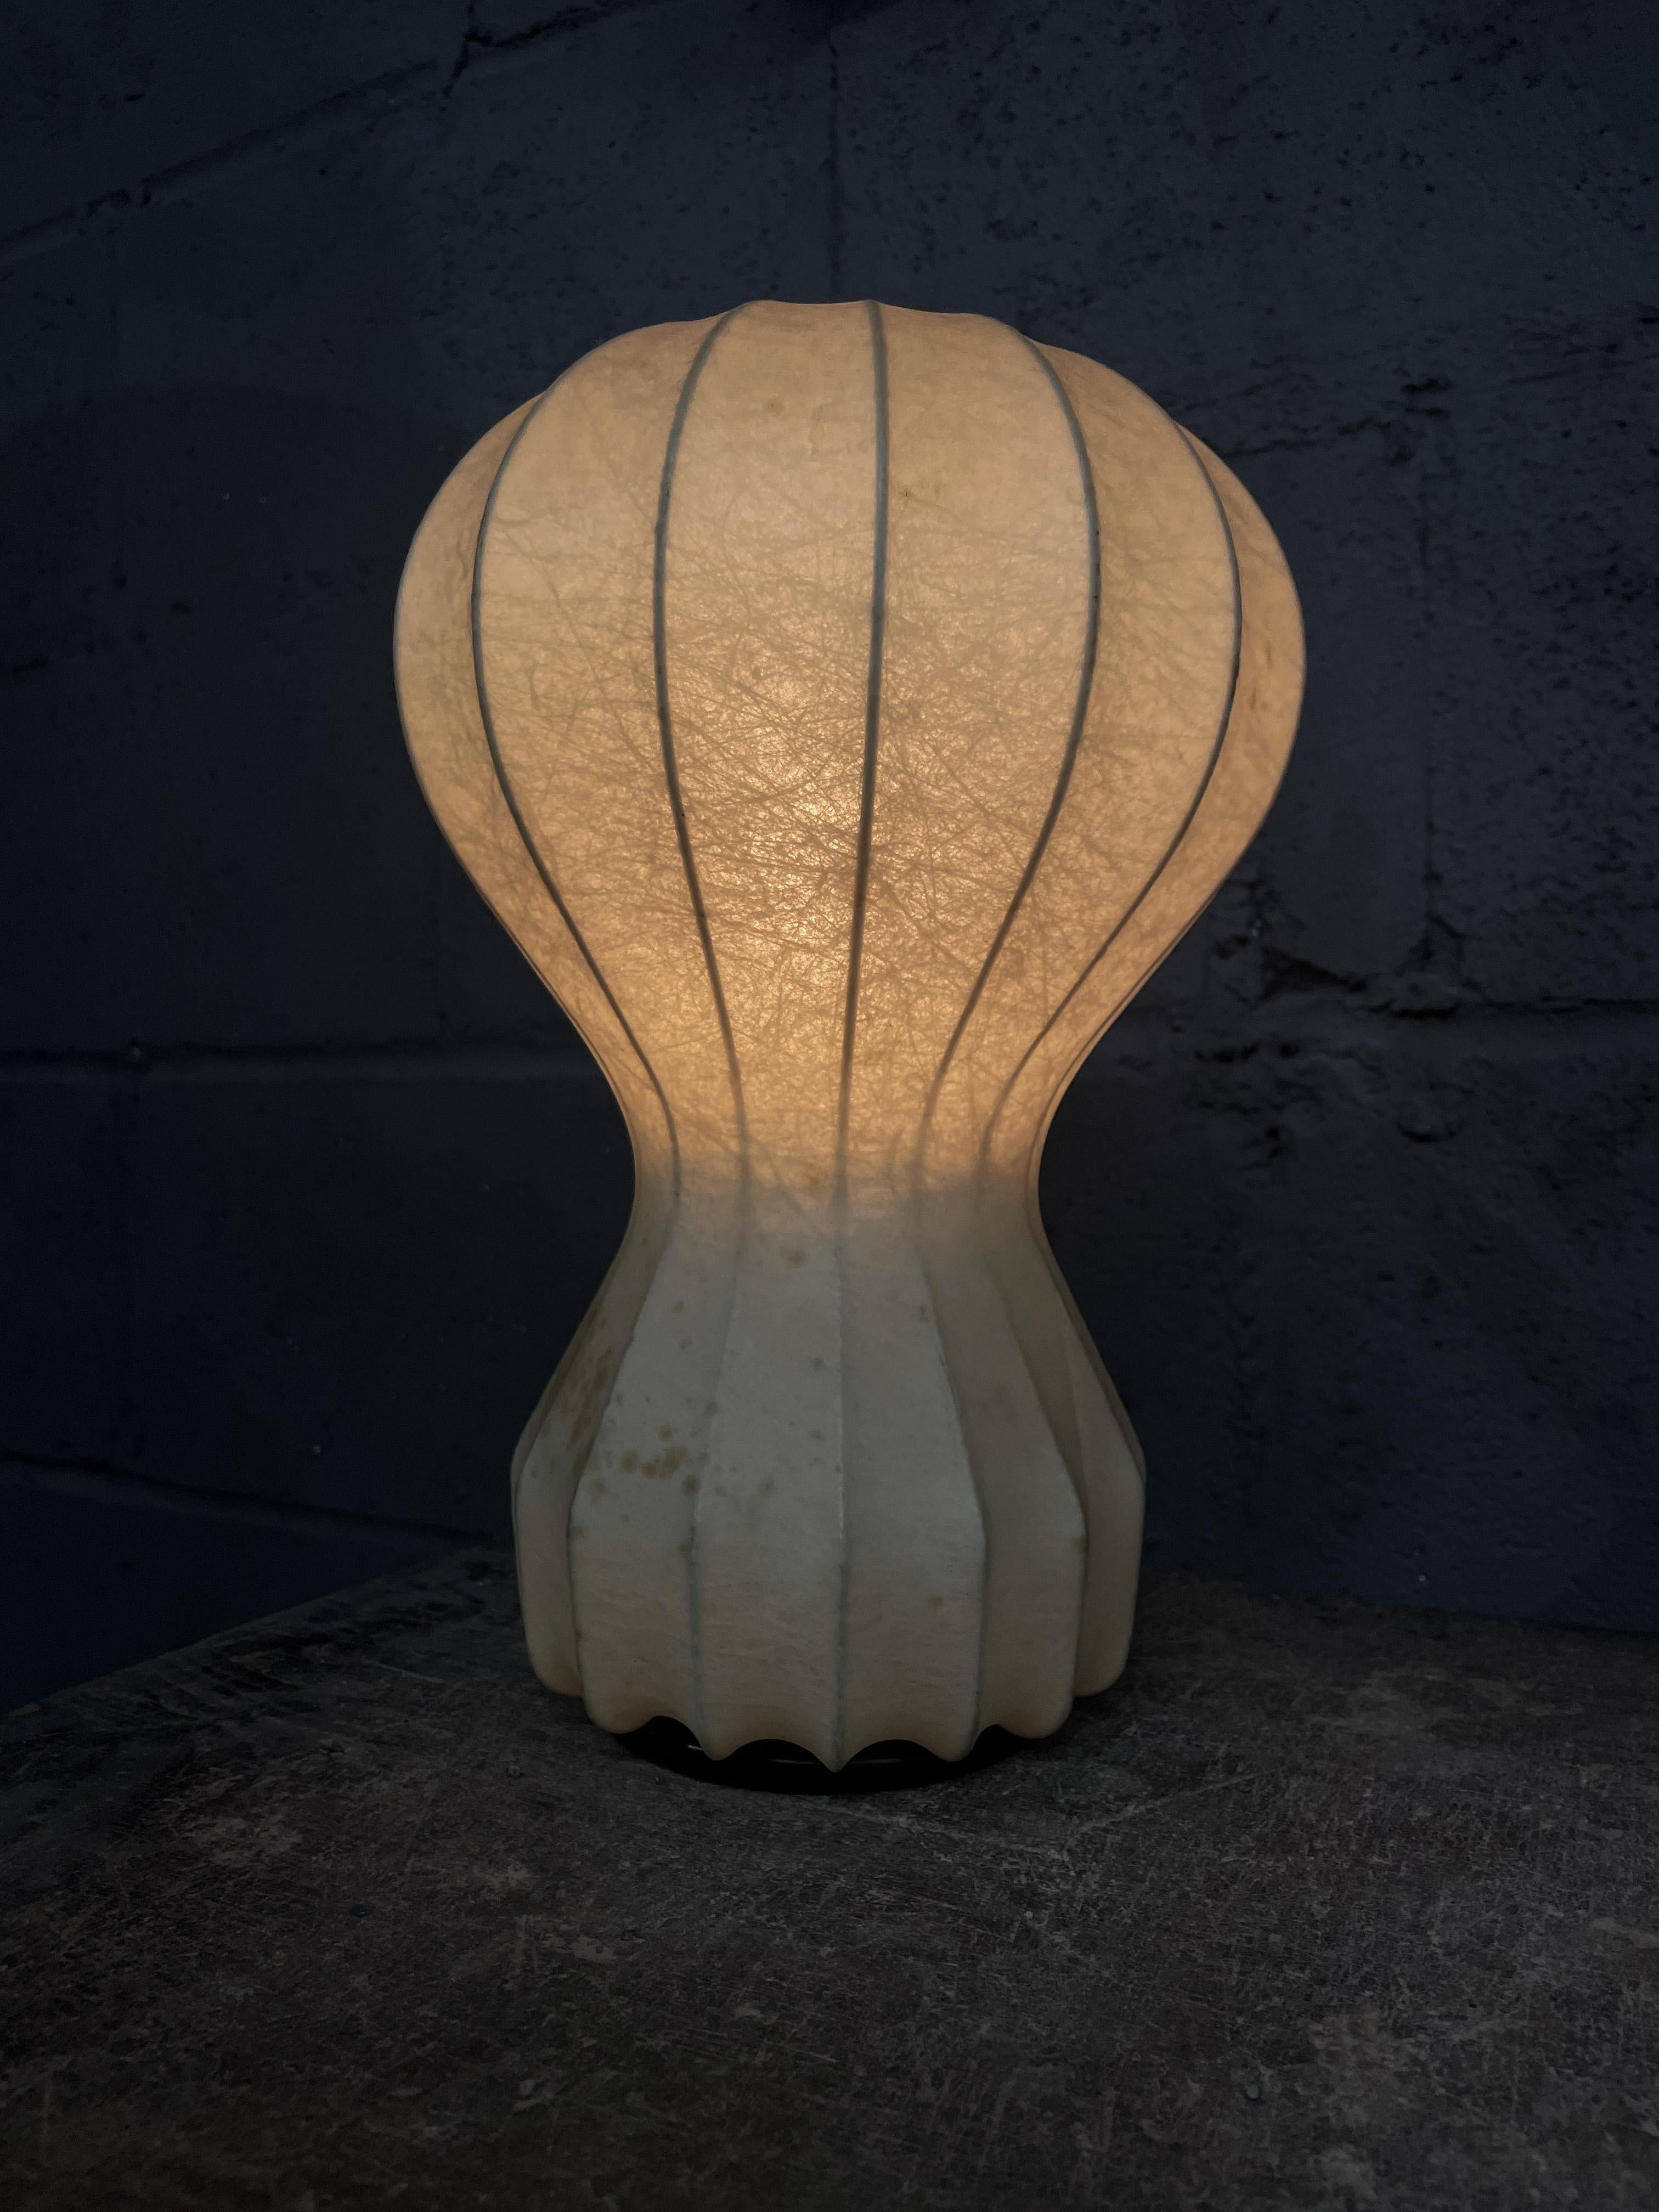 Italian Gatto Lamp By Achille and Pier Castiglioni for Flos - Small - Italy 1960s For Sale